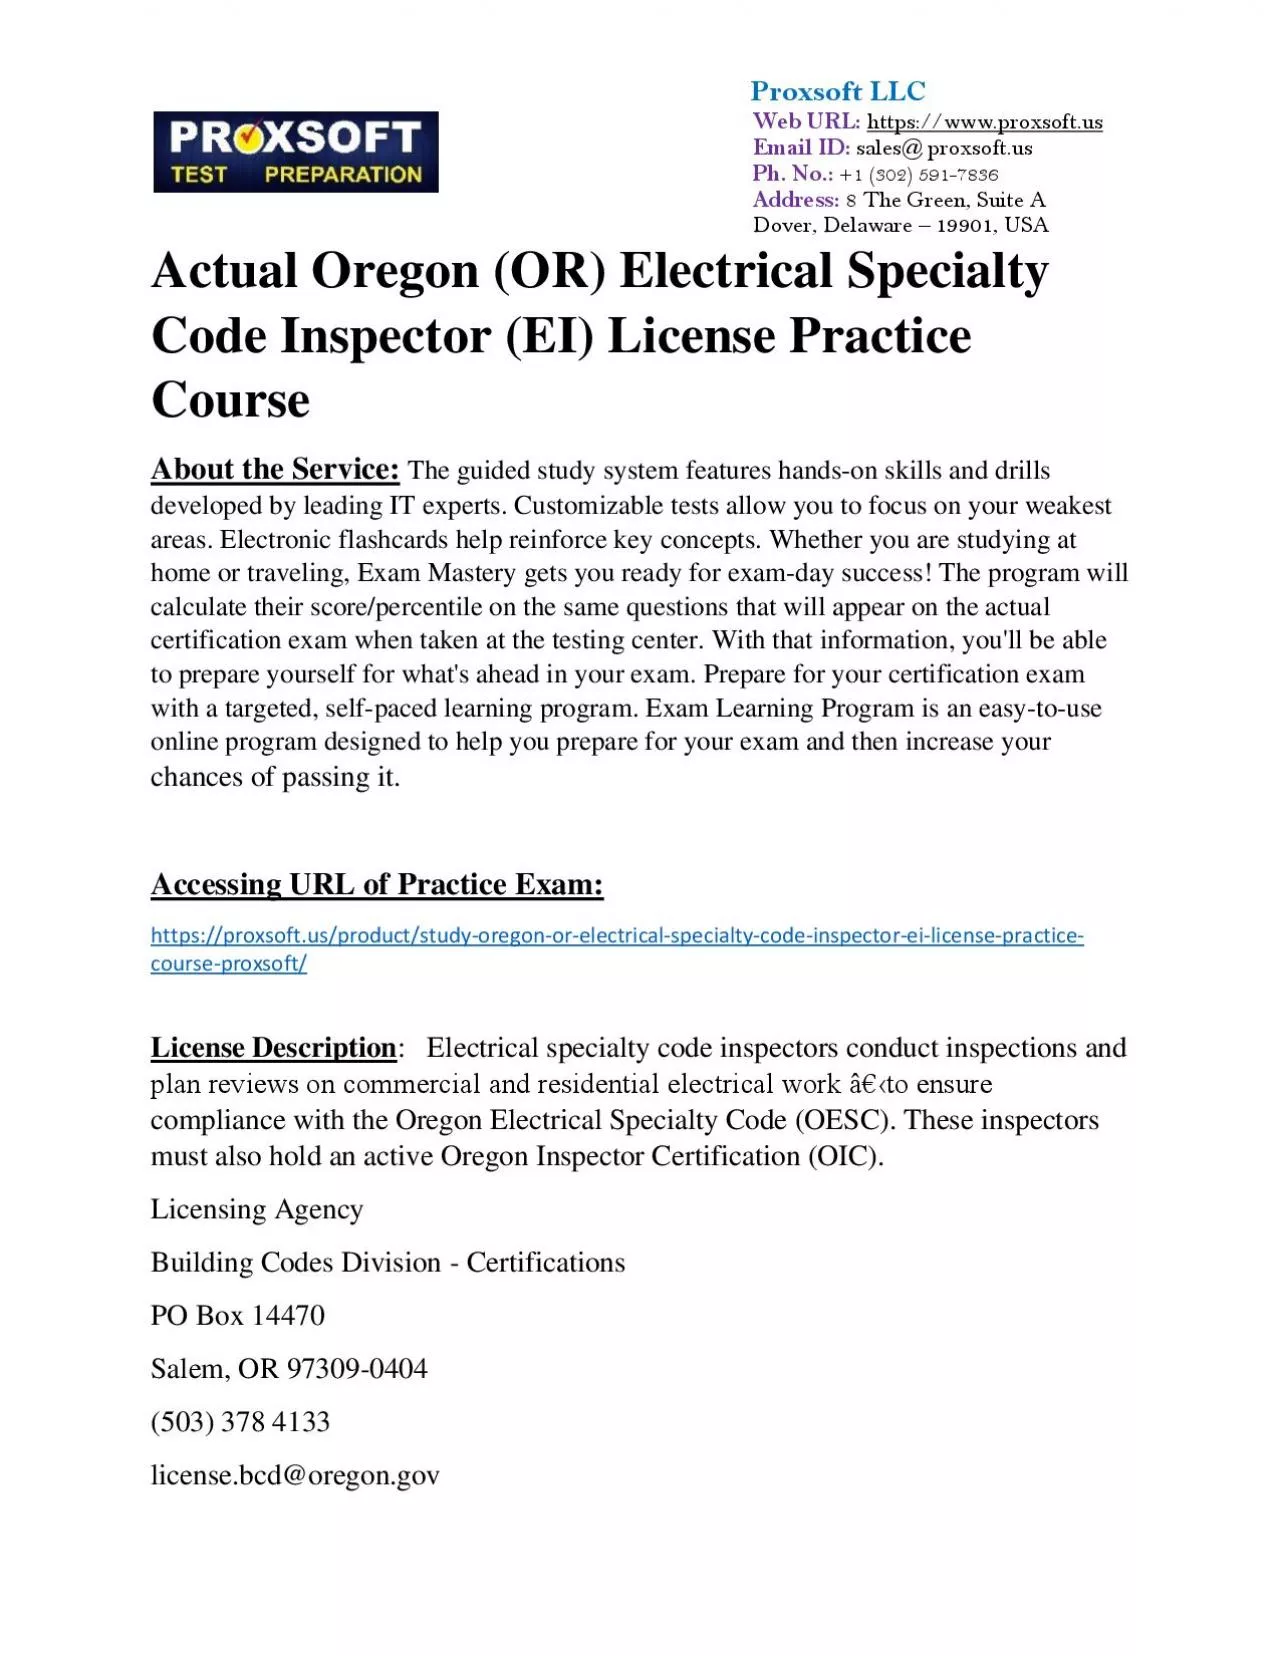 Actual Oregon (OR) Electrical Specialty Code Inspector (EI) License Practice Course